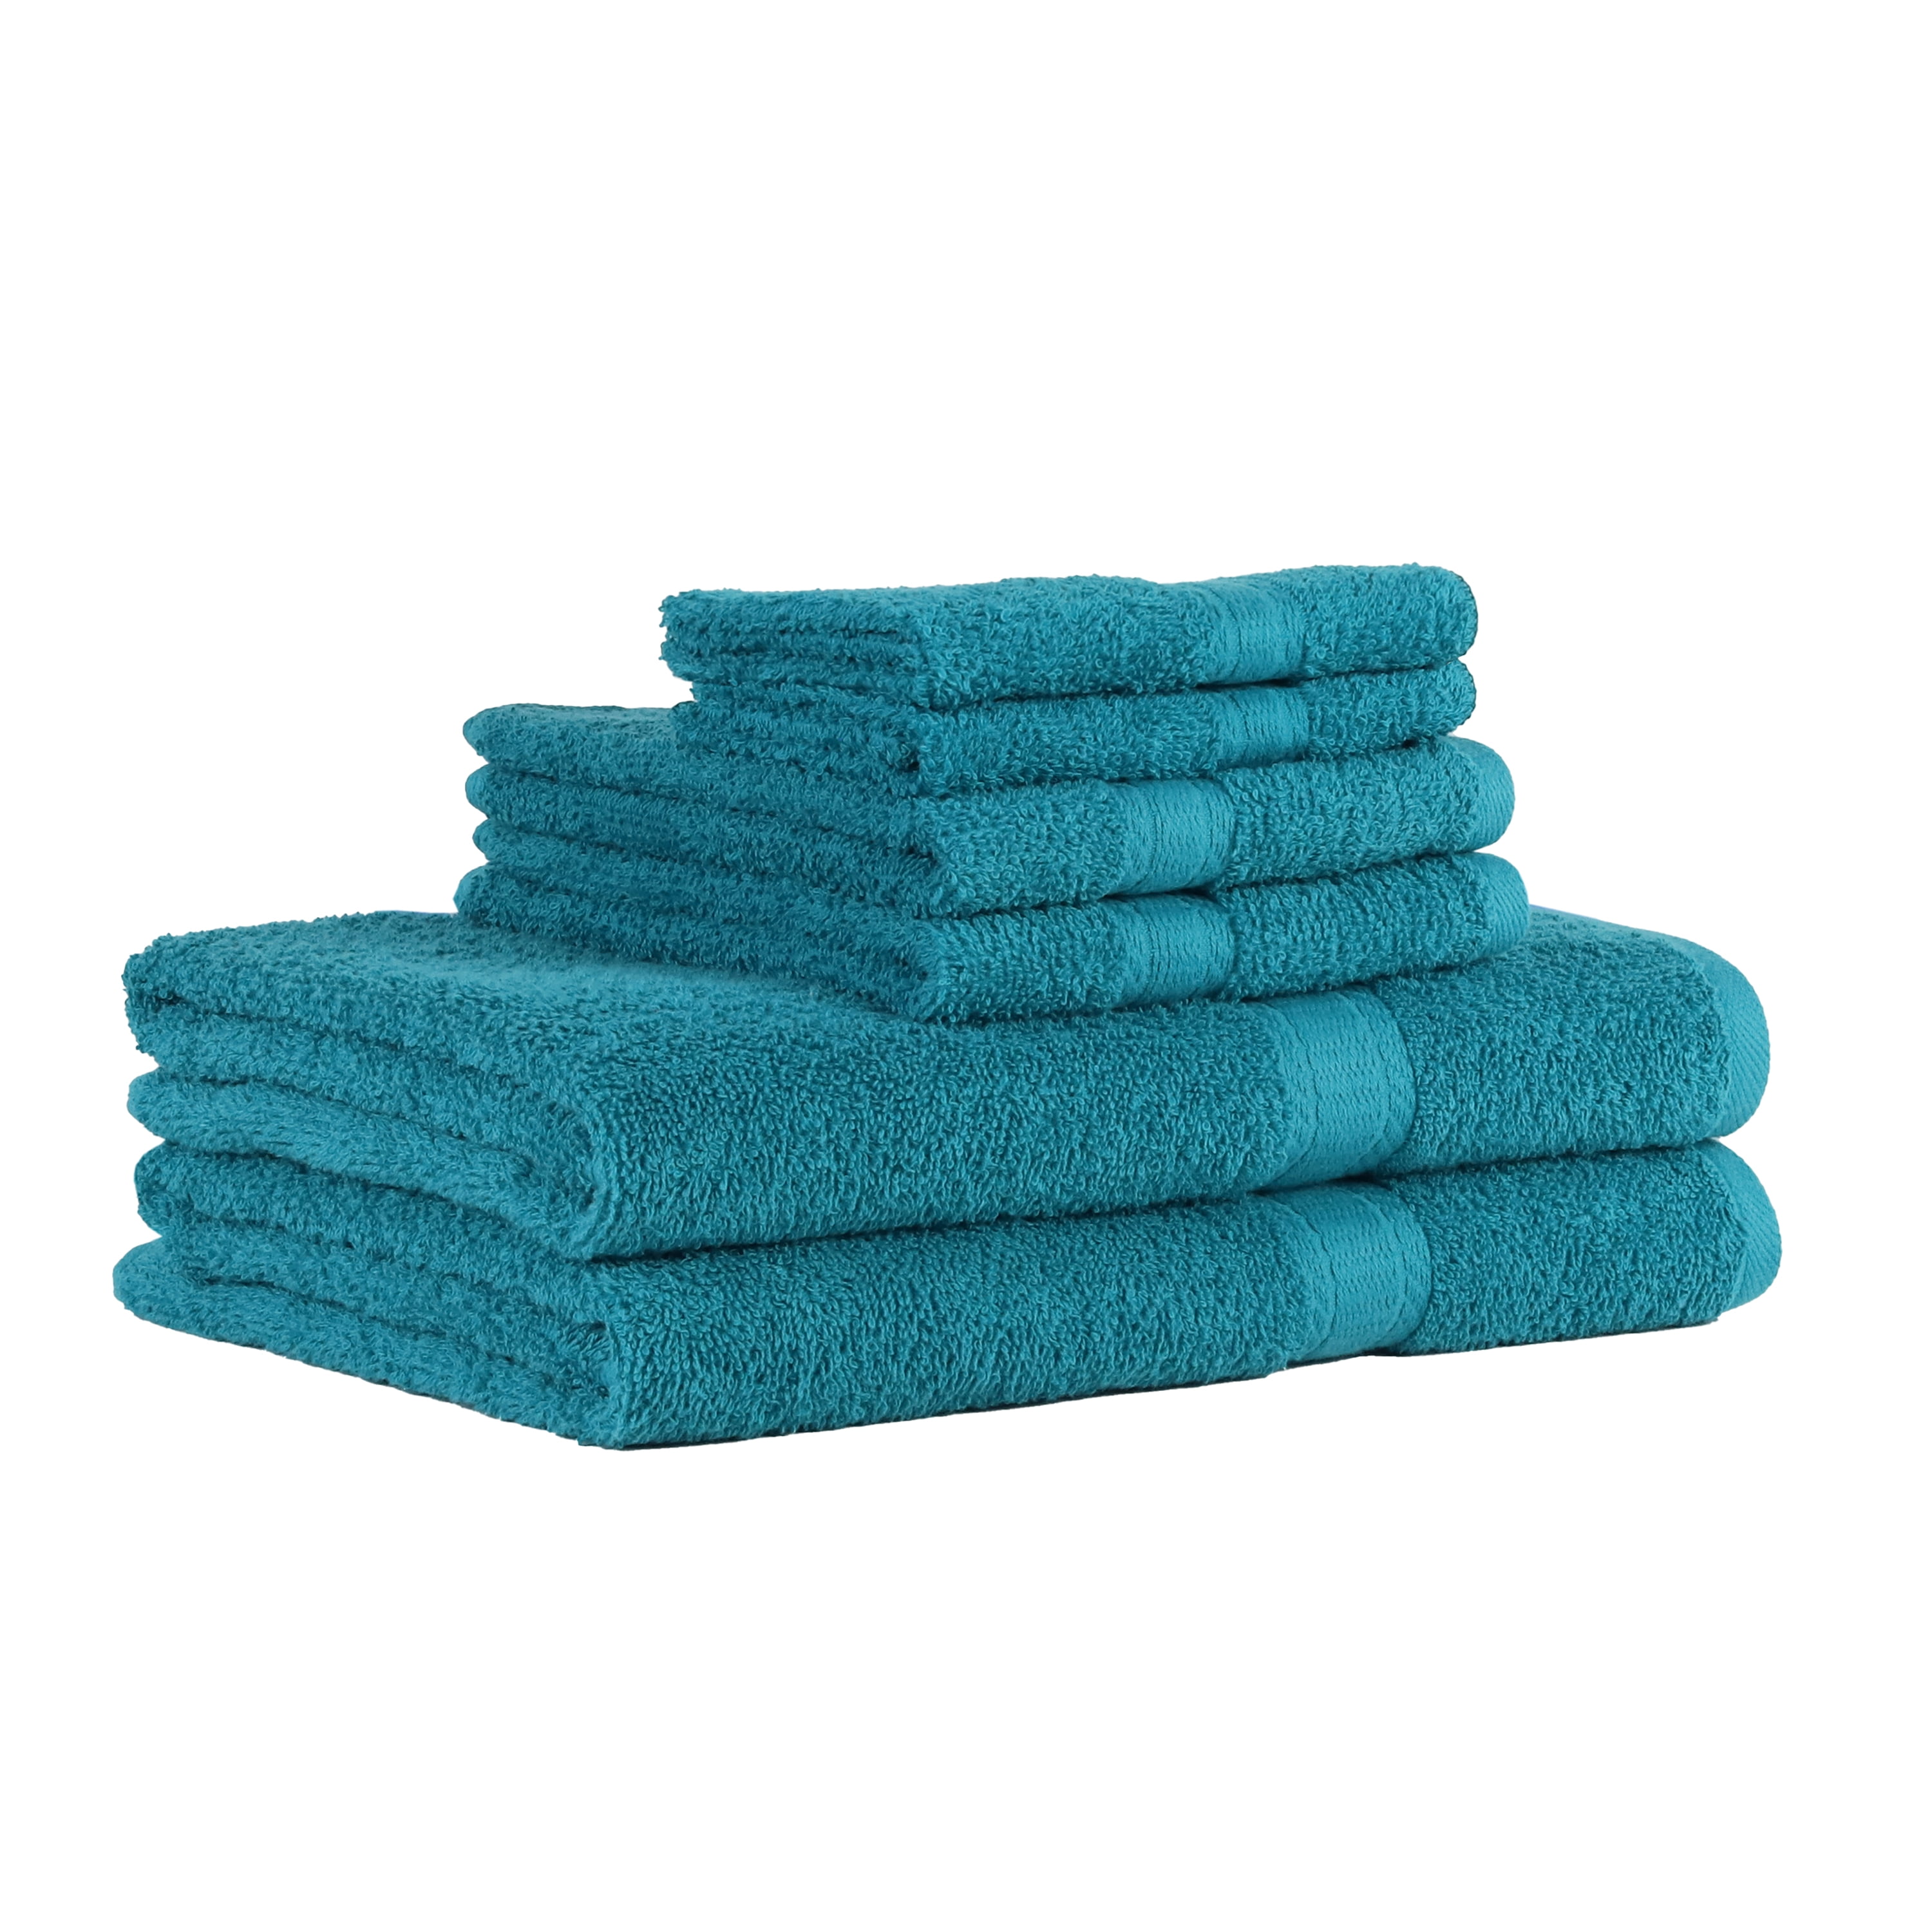 Towel Set Luxury Hotel Spa 6 Pc Turquoise Blue Bathroom Soft Gift Washcloth New 